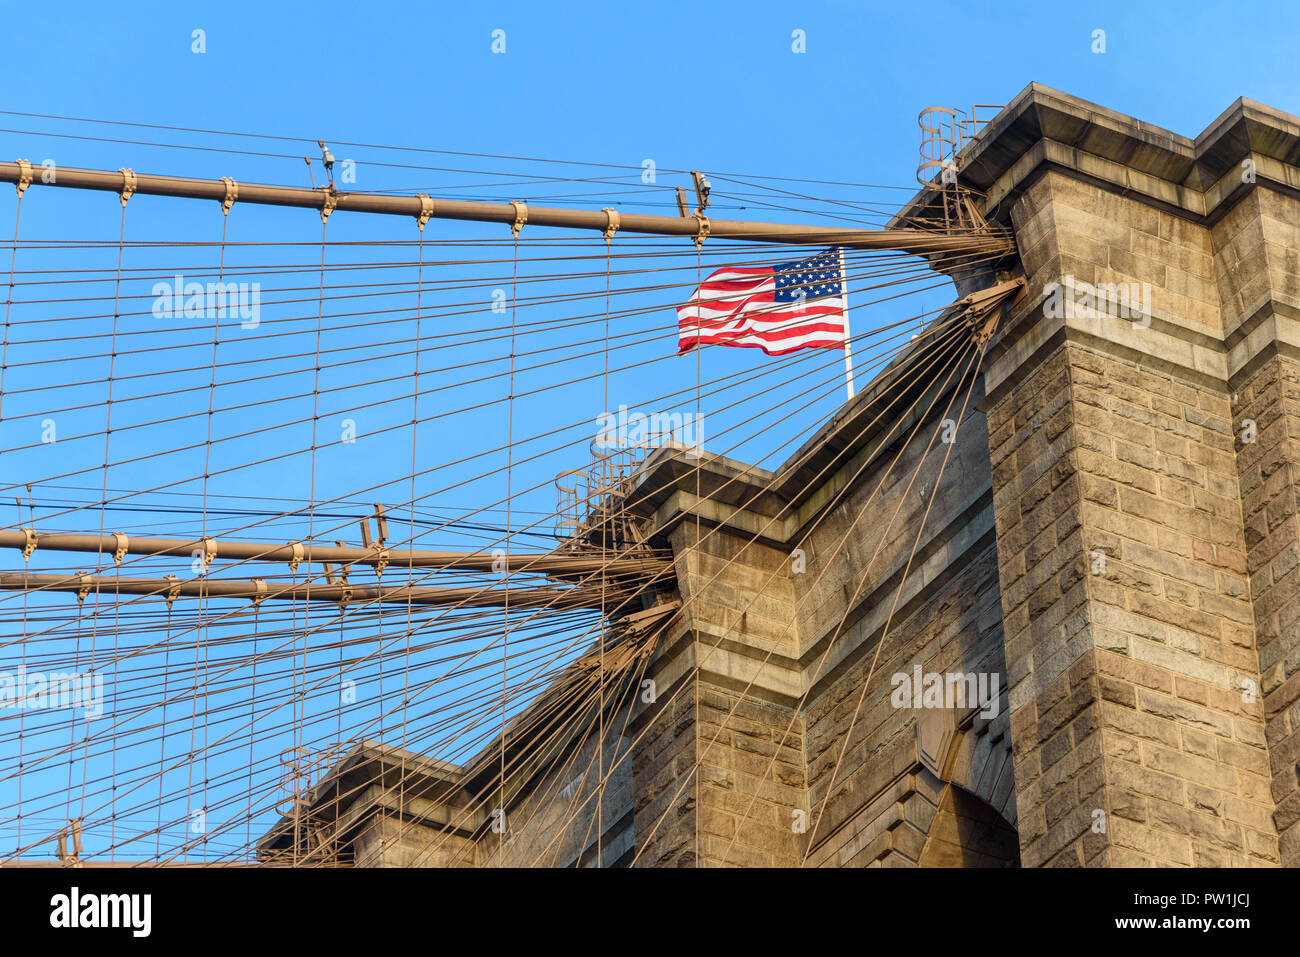 10-2018 Brooklyn, New York. The United States of America flag flies from the Brooklyn Bridge. Photo: © Simon Grosset Stock Photo